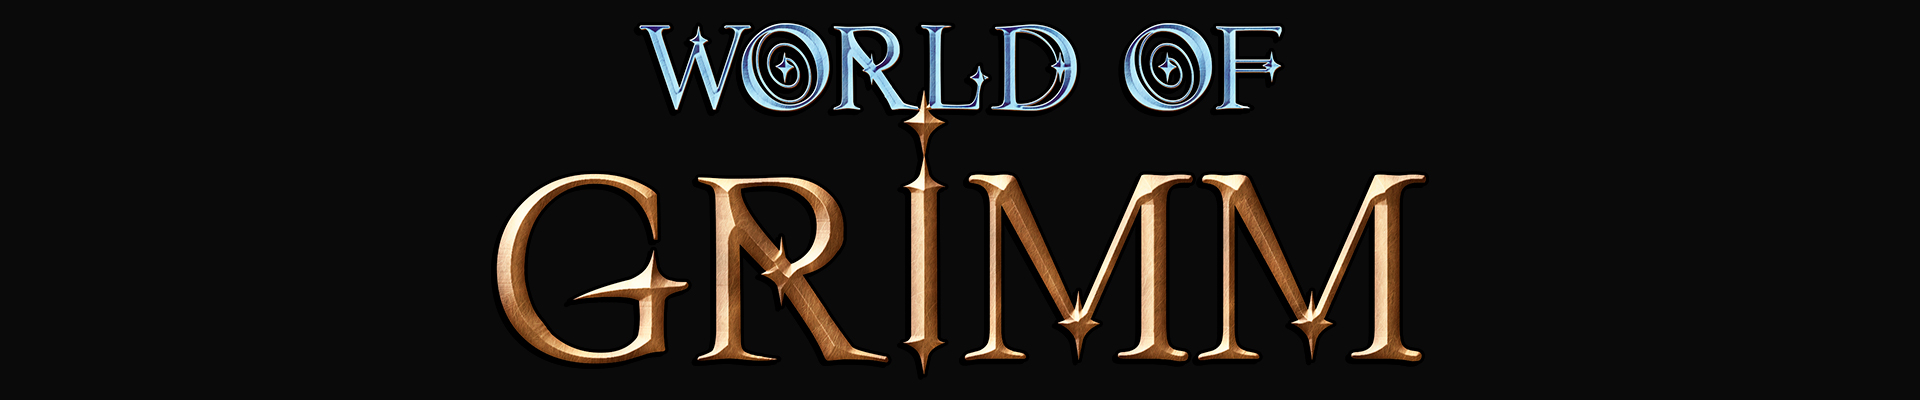 World of Grimm - Kickstarter Build